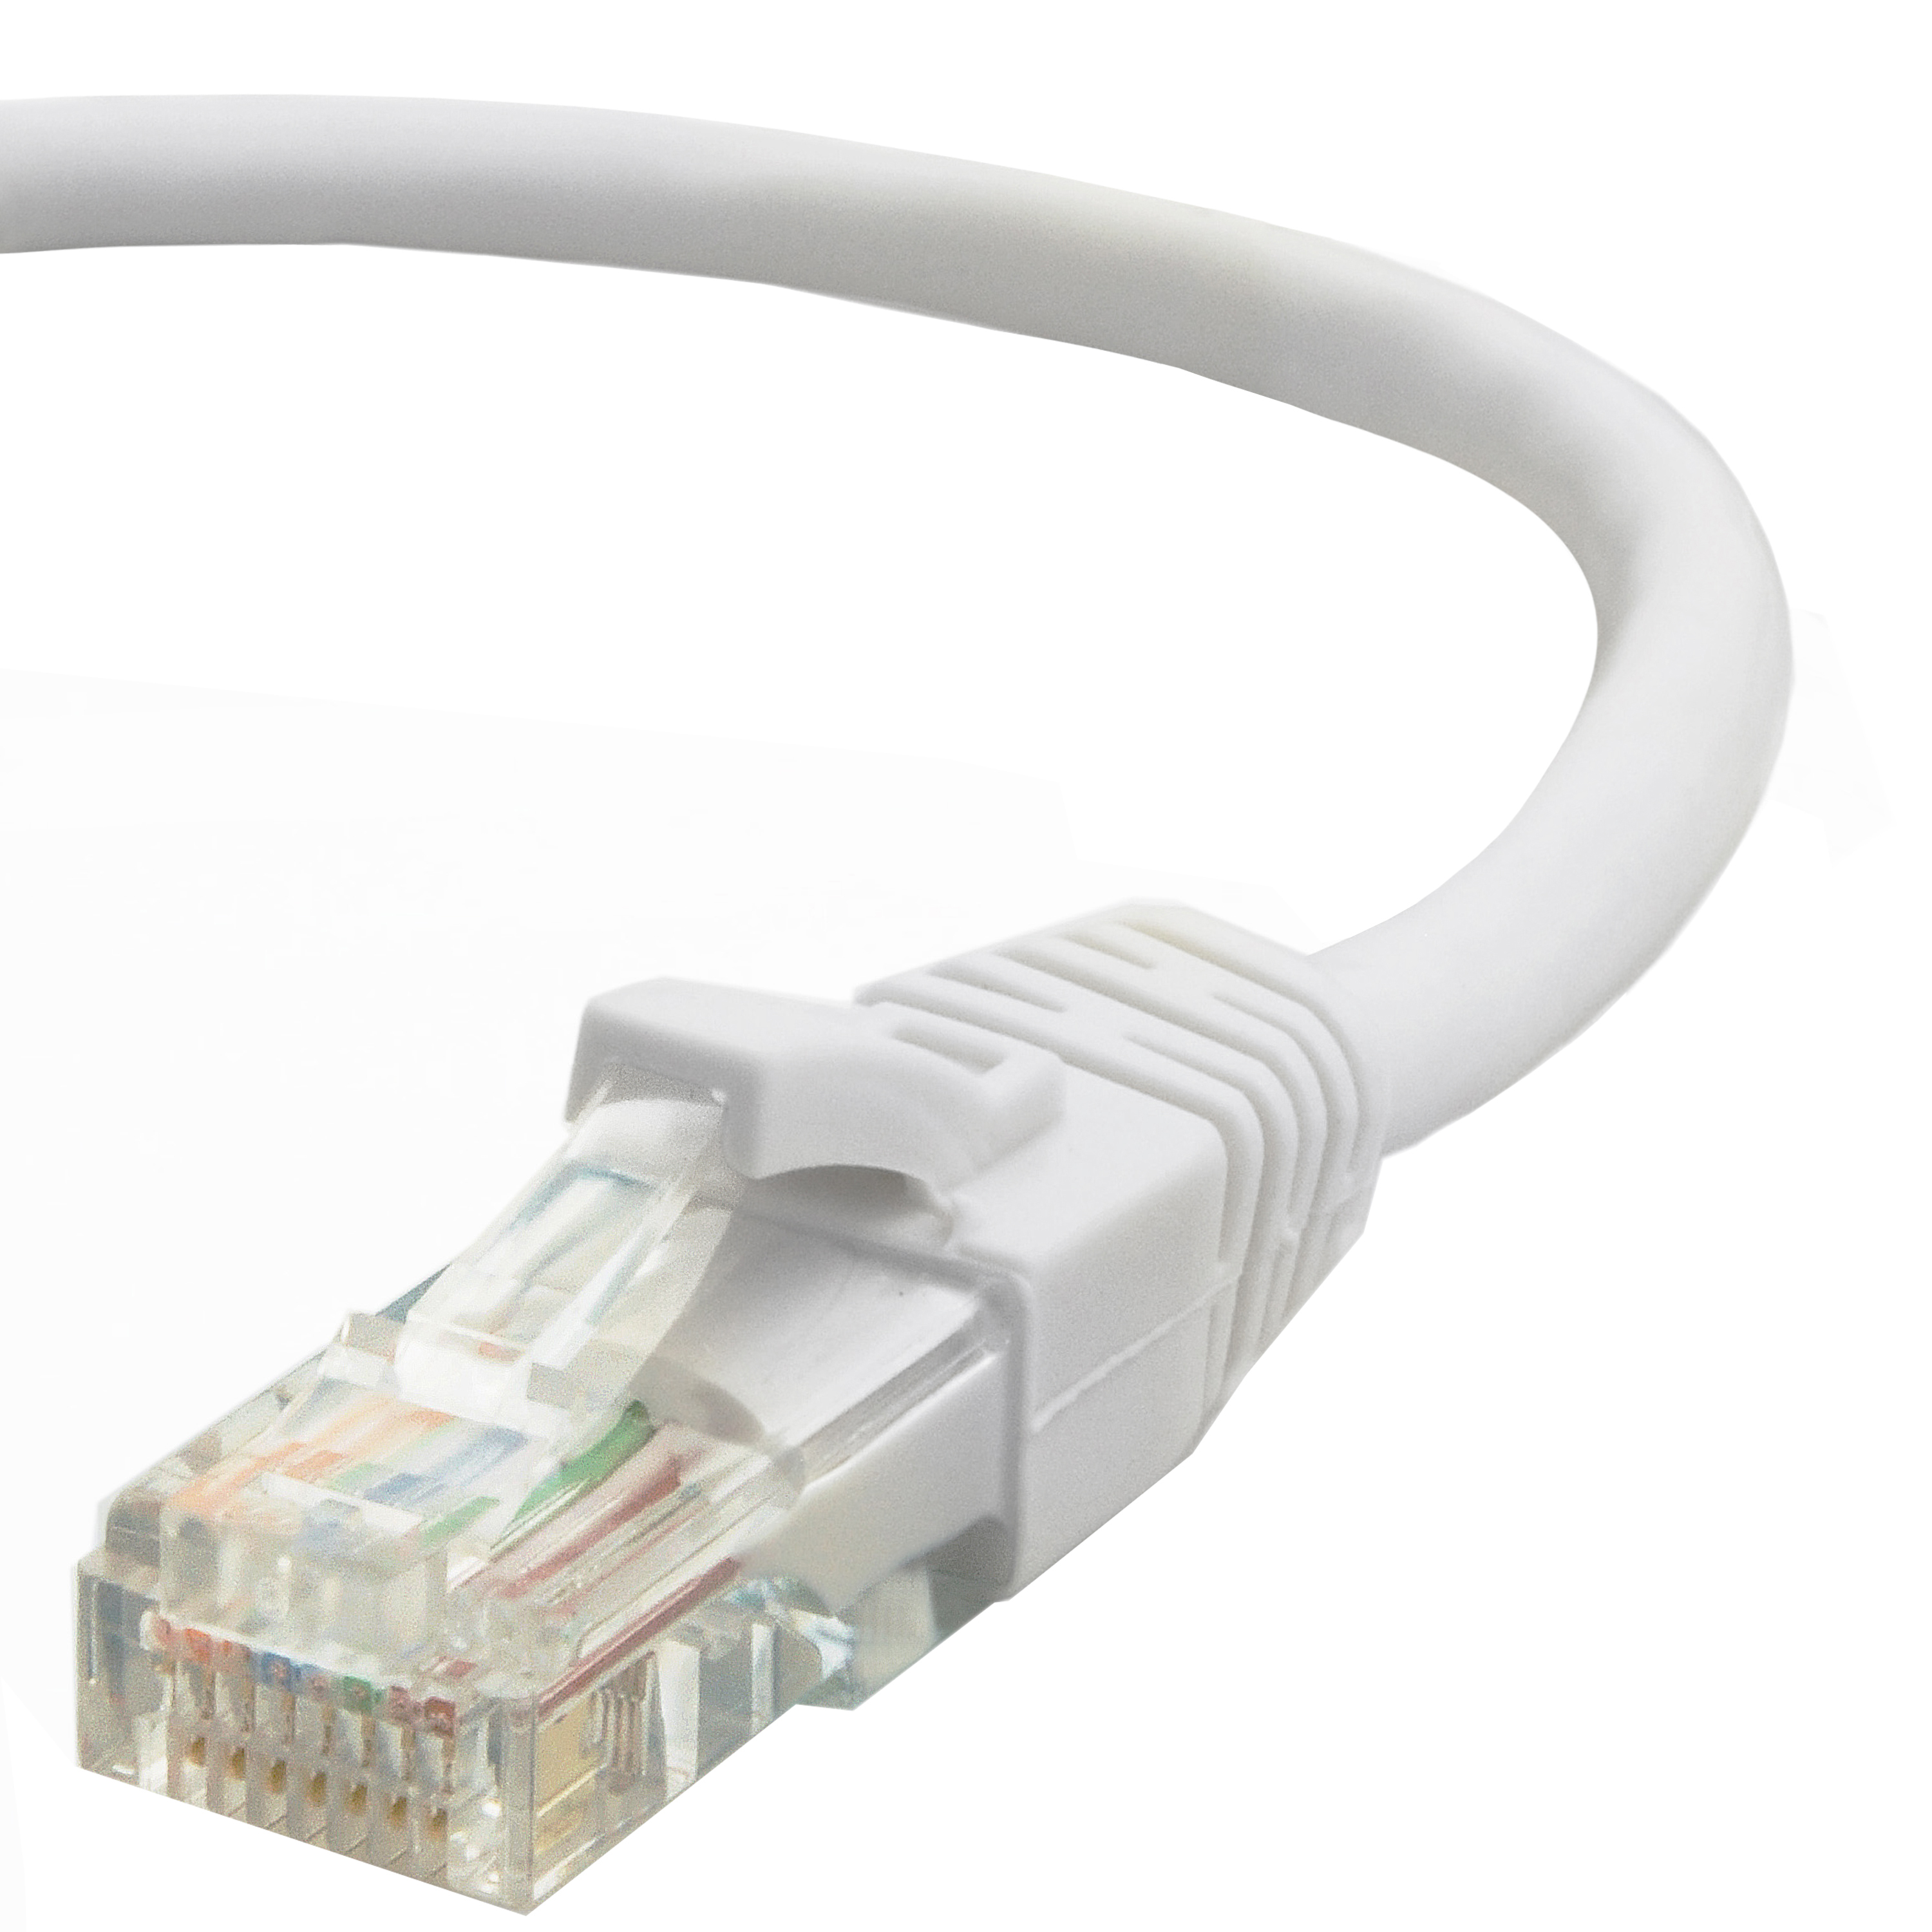 Shop New Mediabridge Ethernet Cable - Supports Cat6 / Cat5e / Cat5  Standards (White - 15 Feet) | Mediabridge Products